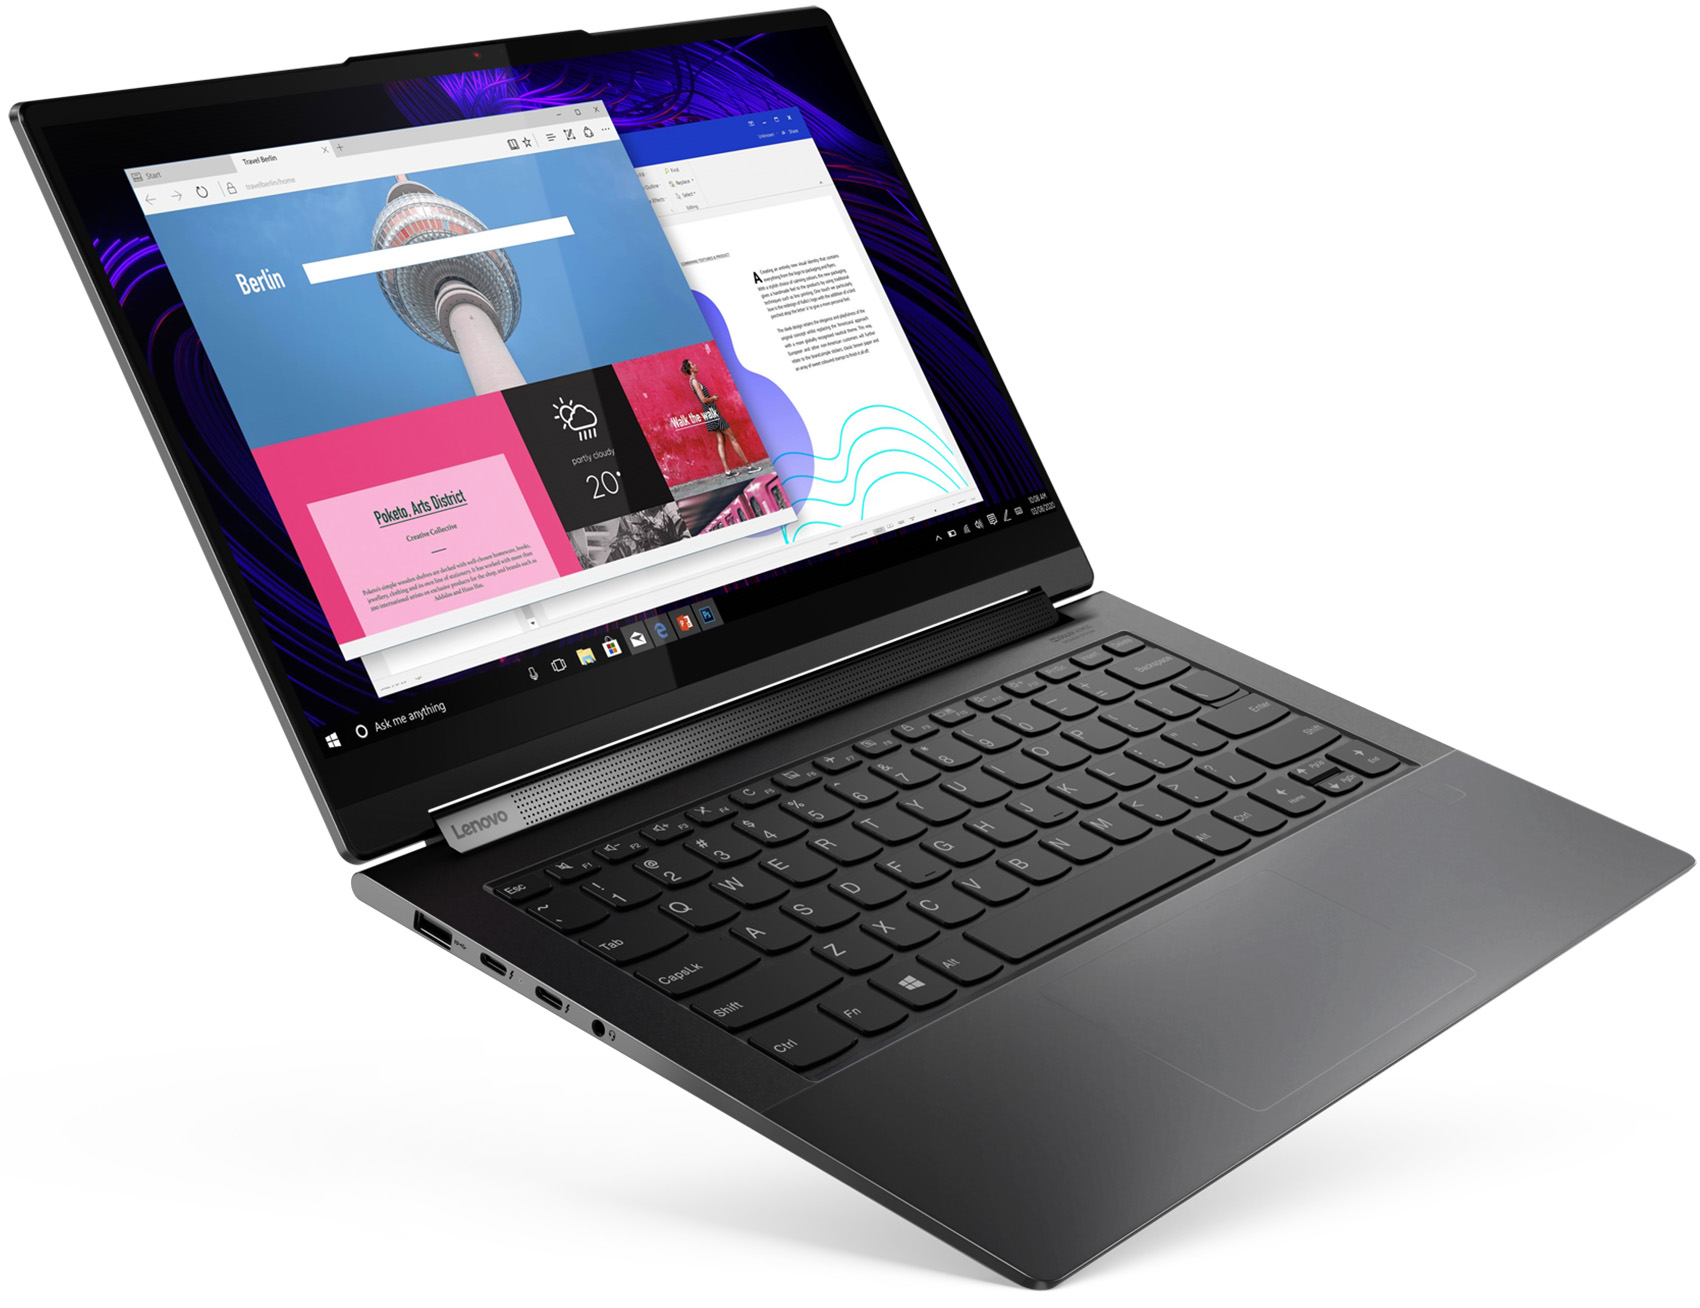 Lenovo Yoga 9i -14 2-in-1 Laptop (Intel i7-1185G7, 8GB RAM, 2TB PCIe SSD, Intel Iris Xe, Win 10 Home)